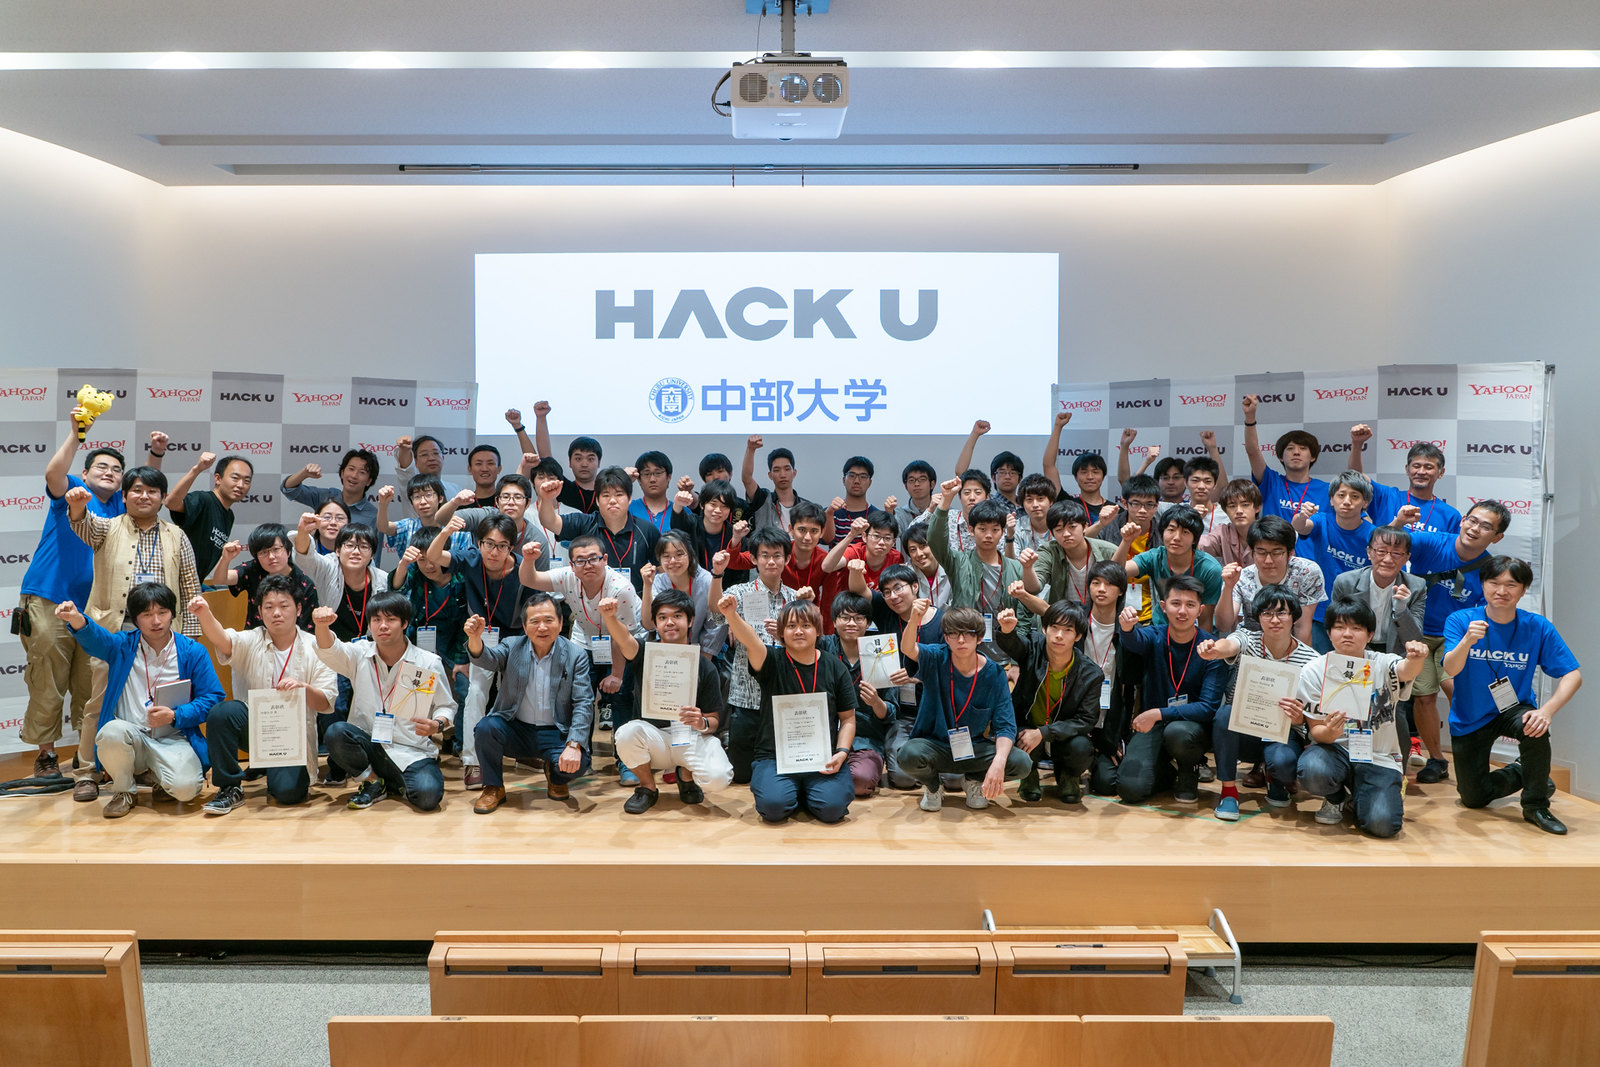 Hack U 中部大学 2019